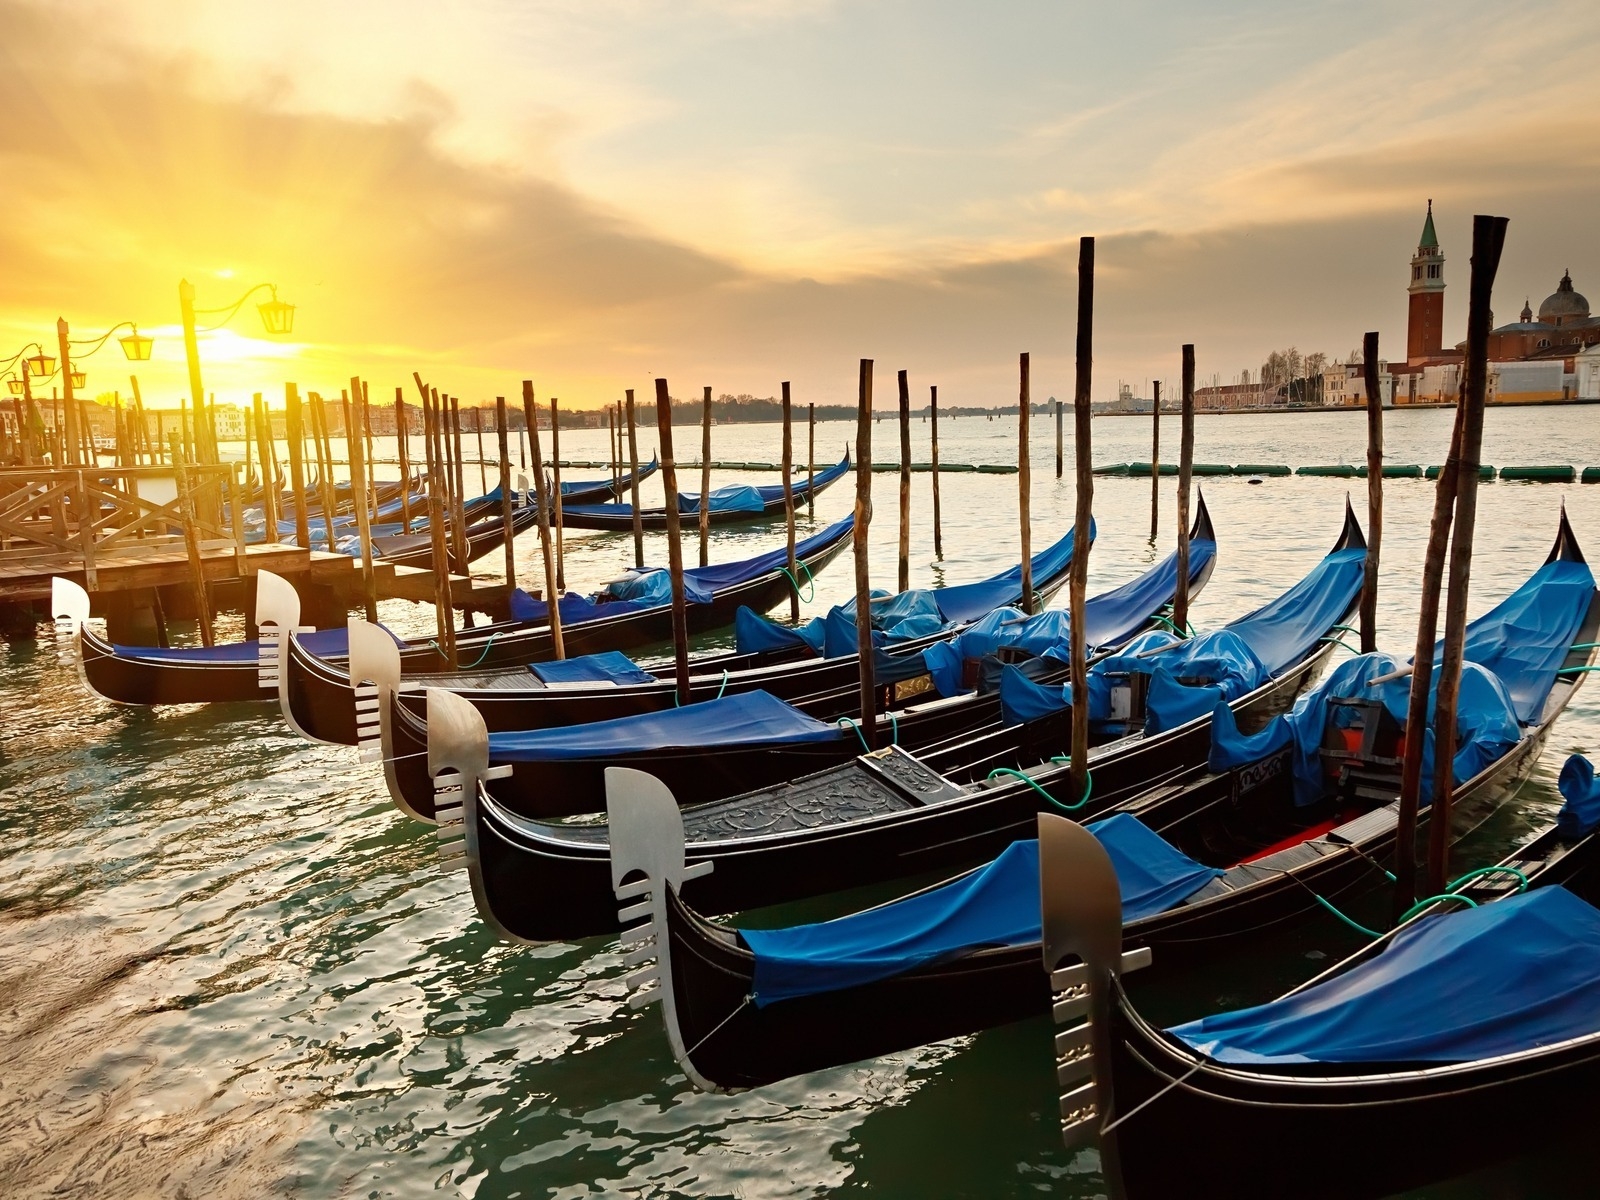 Venice Sunrise for 1600 x 1200 resolution